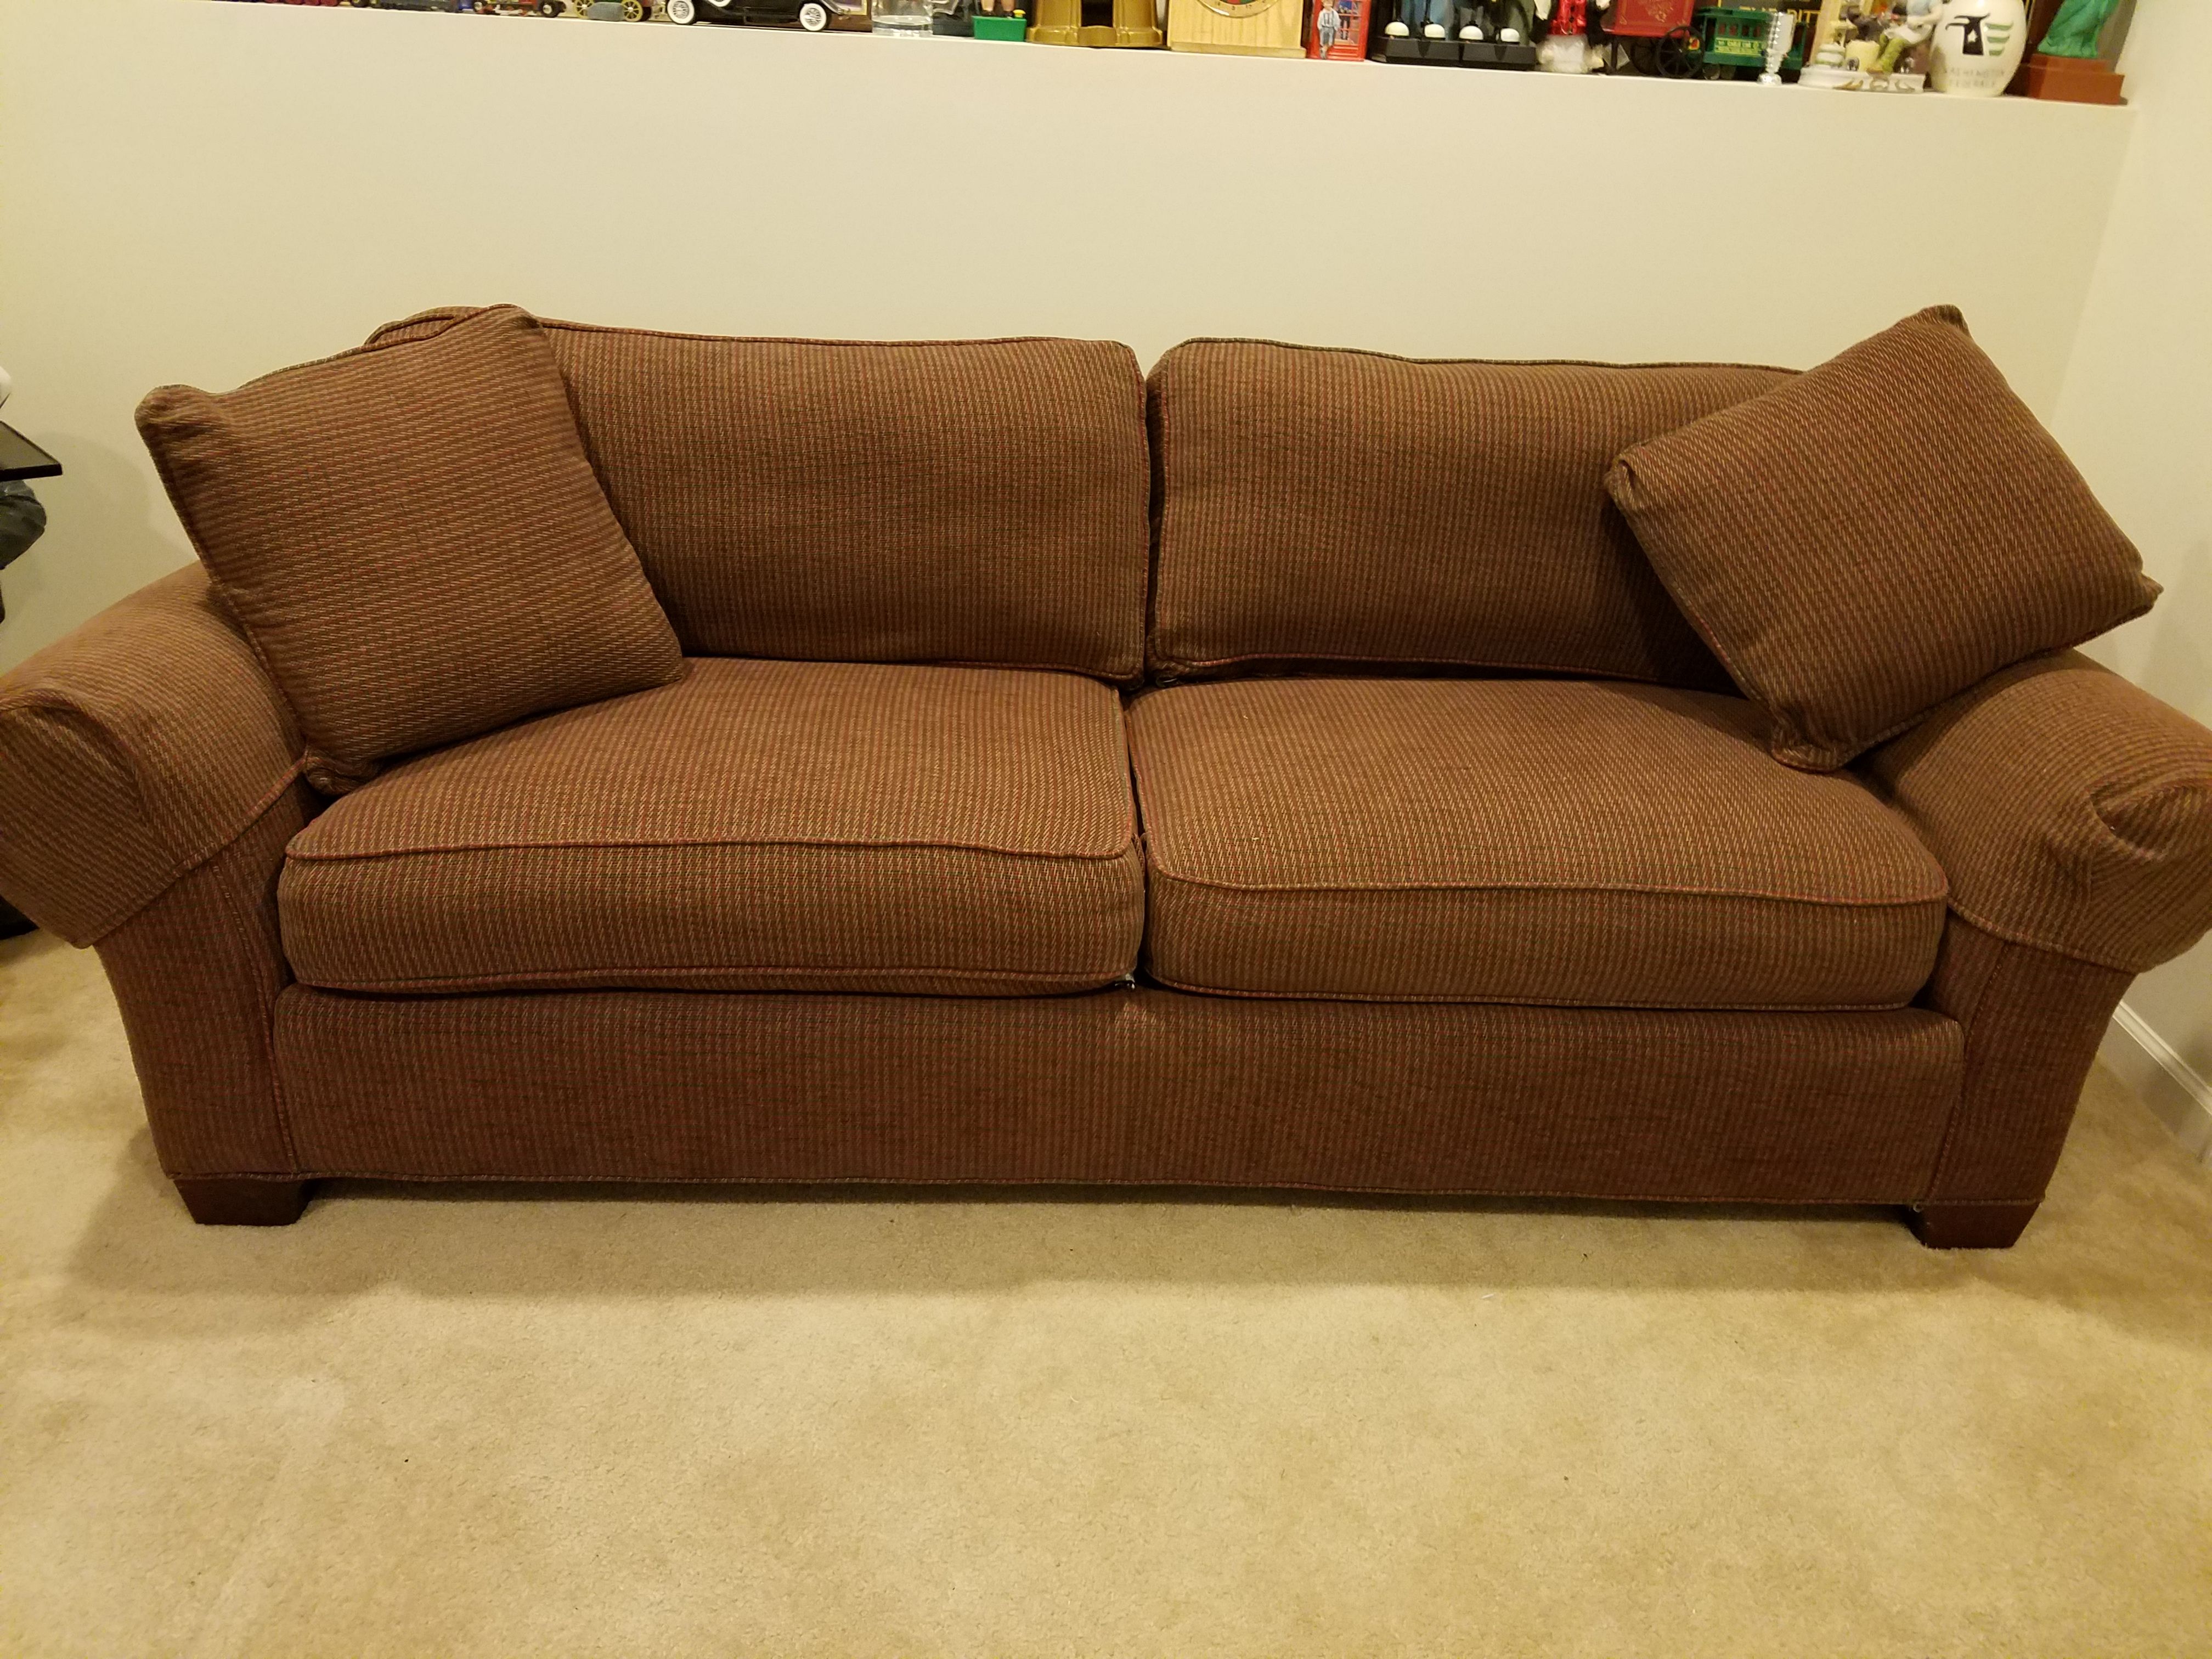 High Quality Sofa, like NEW, Barely Used